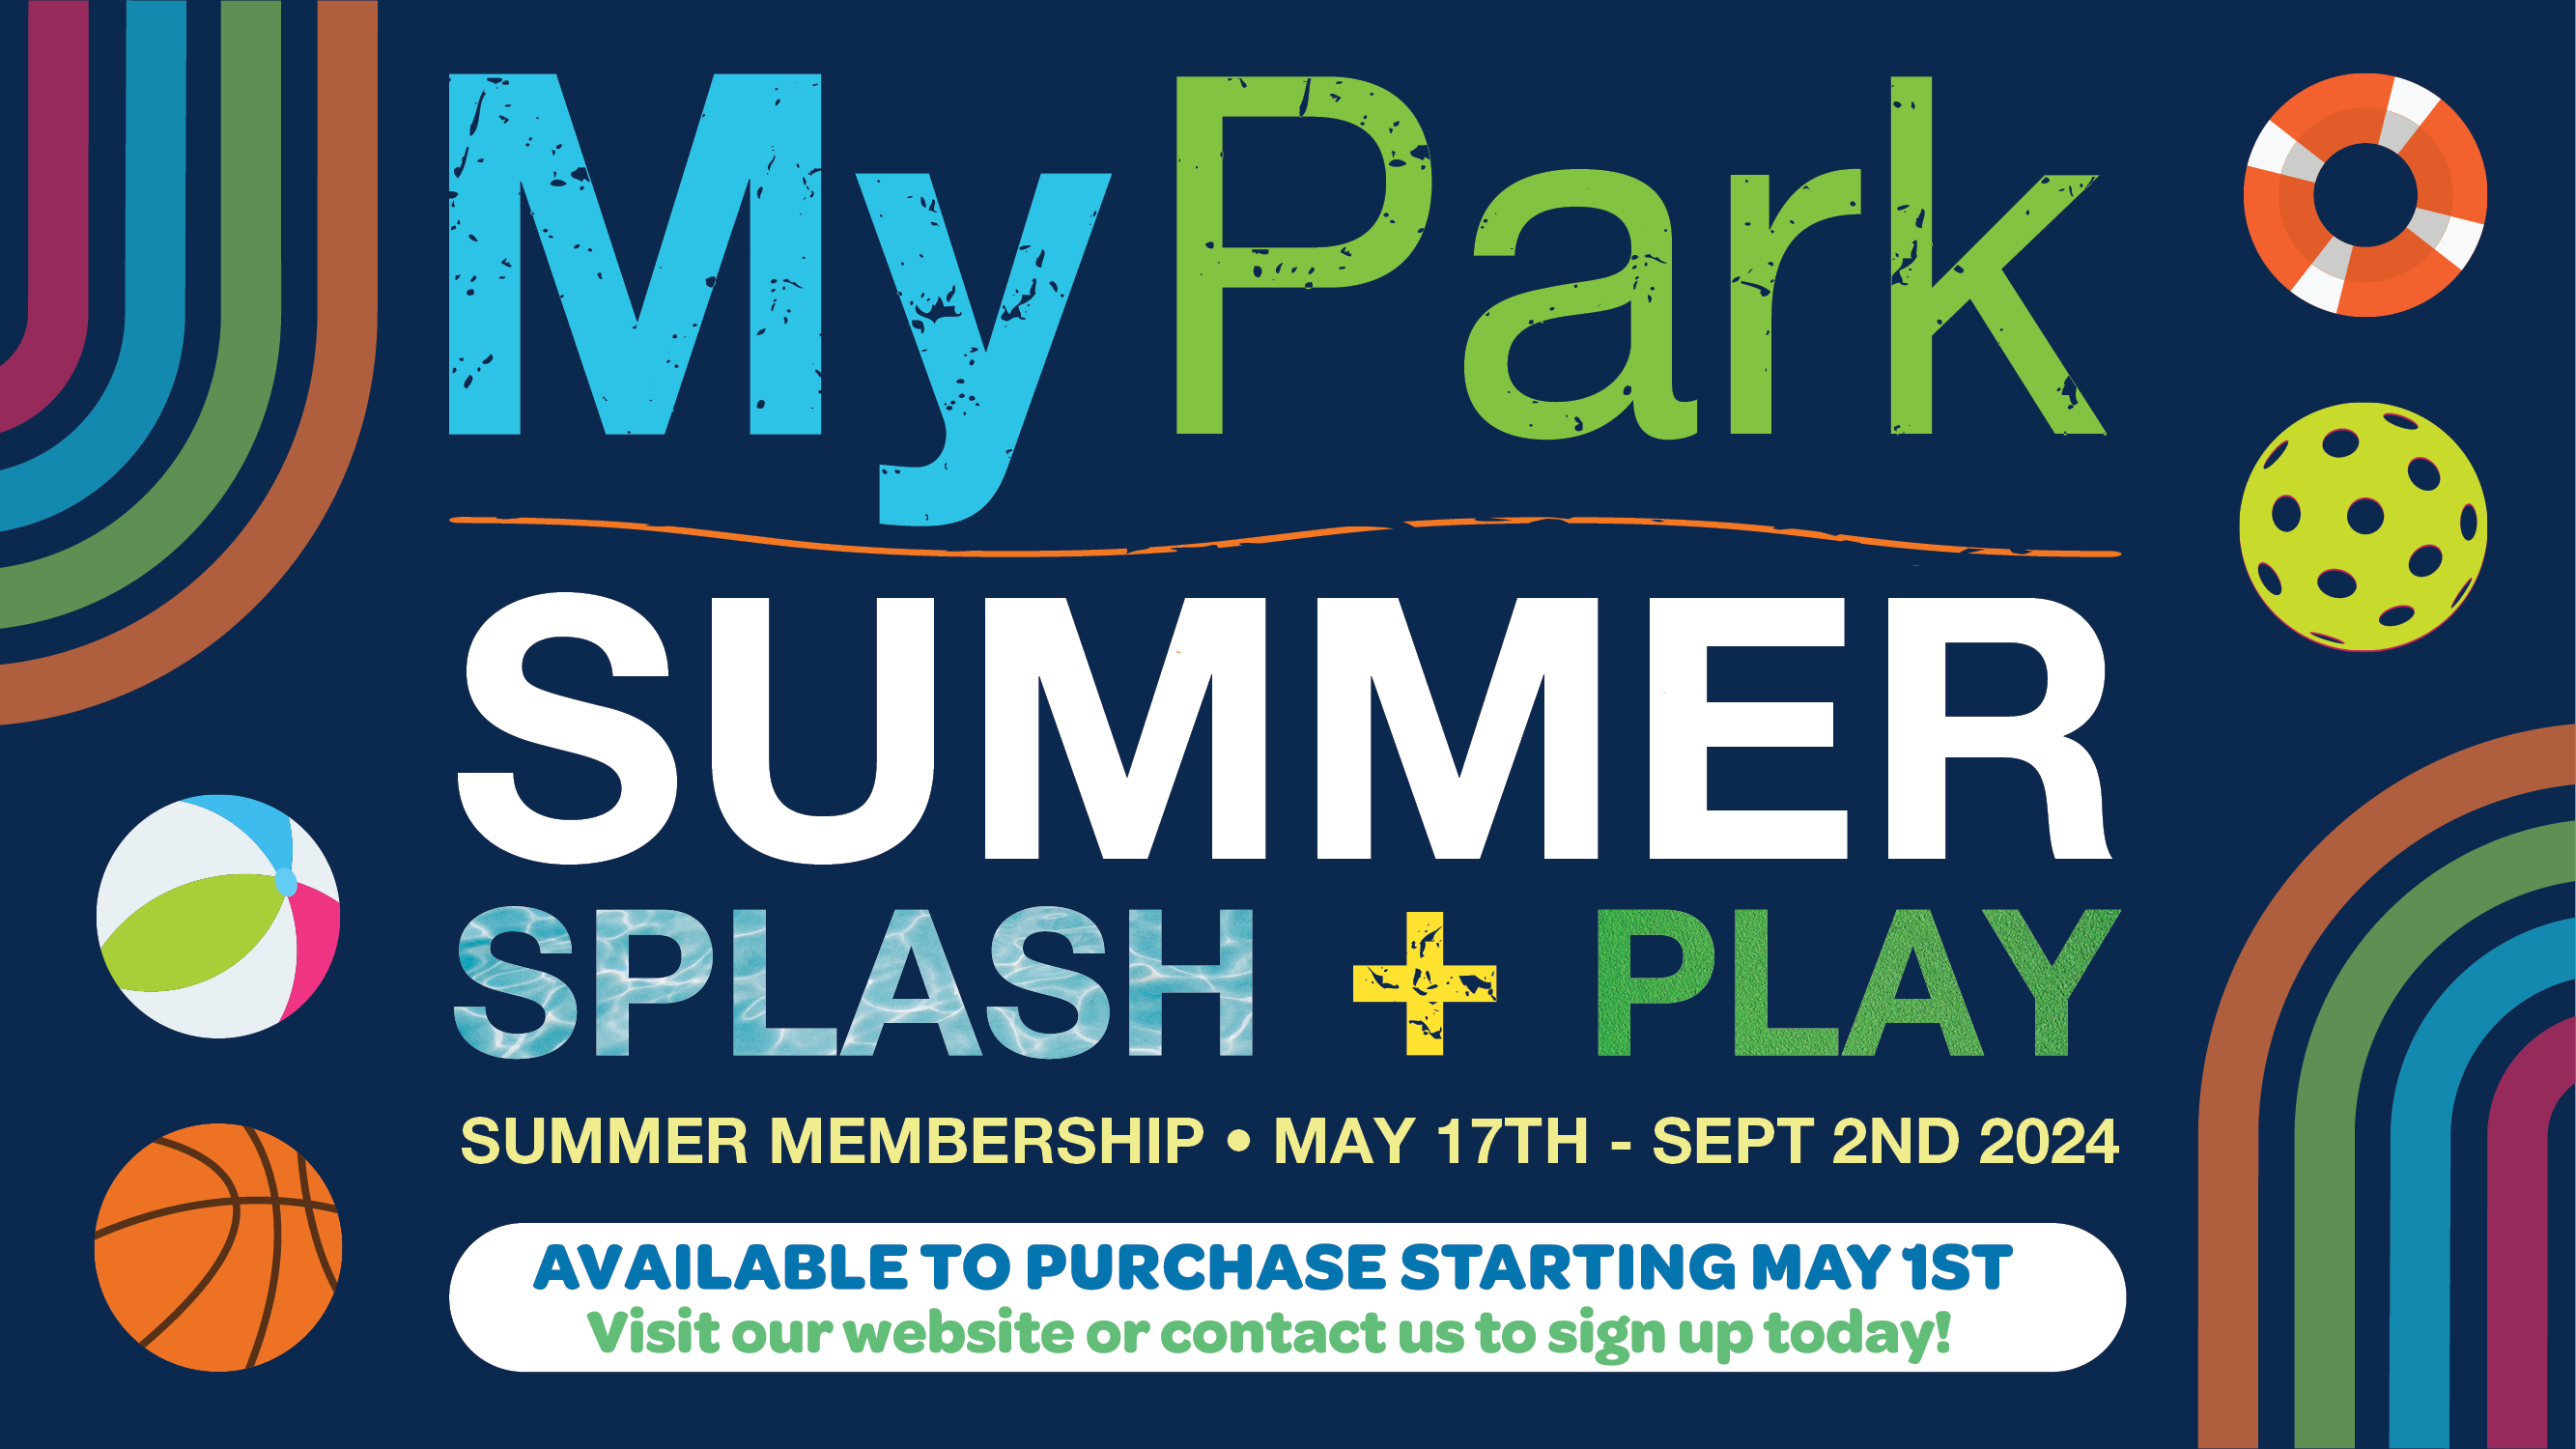 2024 Summer Splash Plus Play Membership at Mylan Park from May 17th until September 2nd